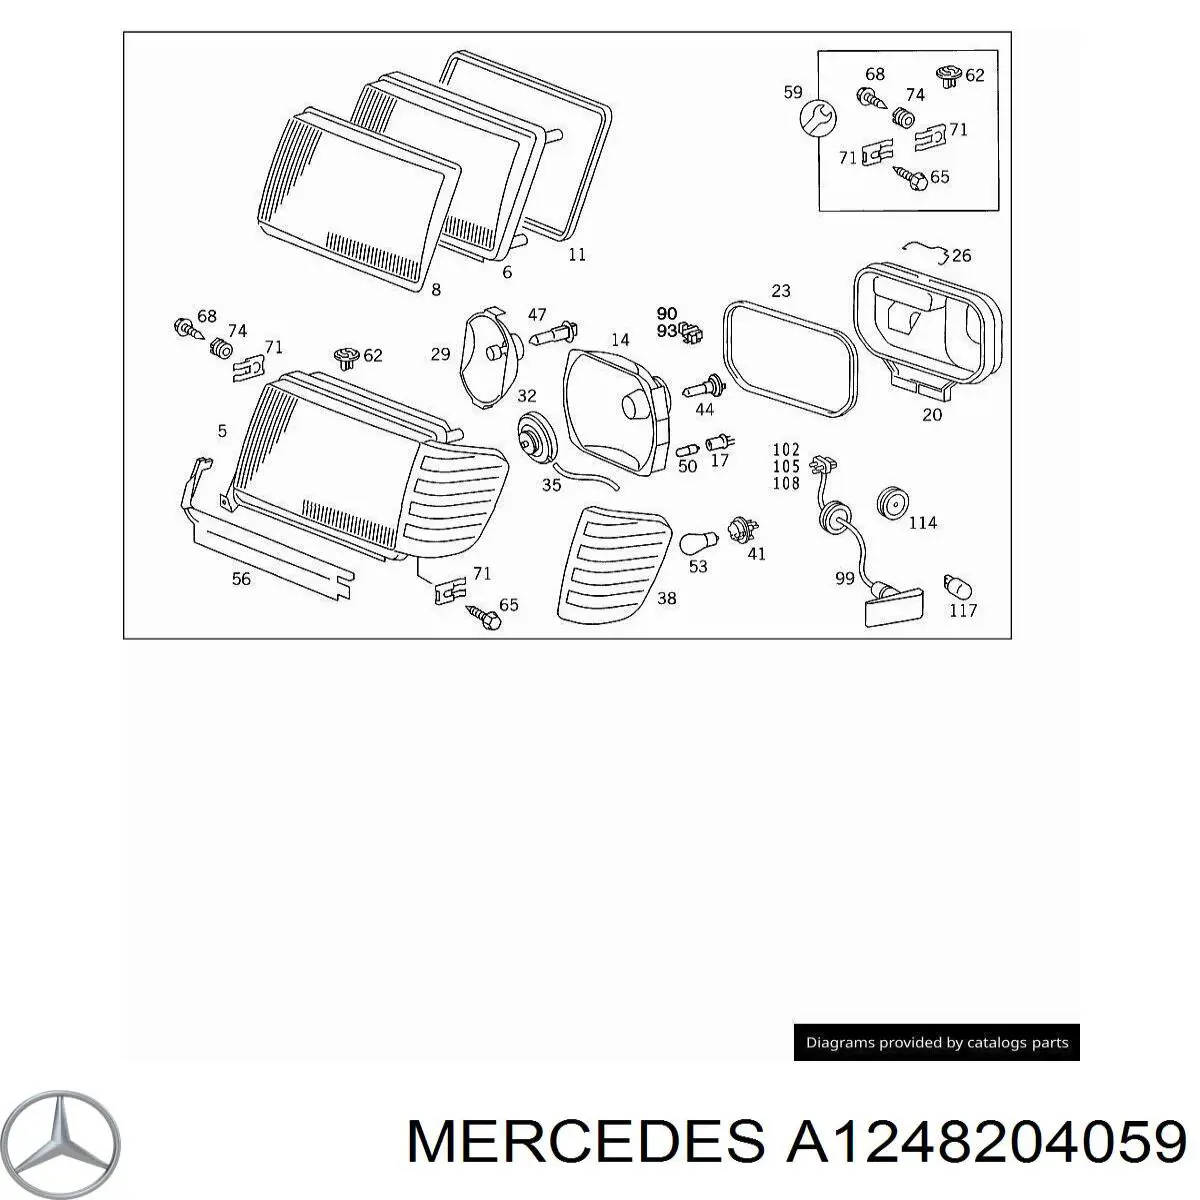 A1248204059 Mercedes faro derecho